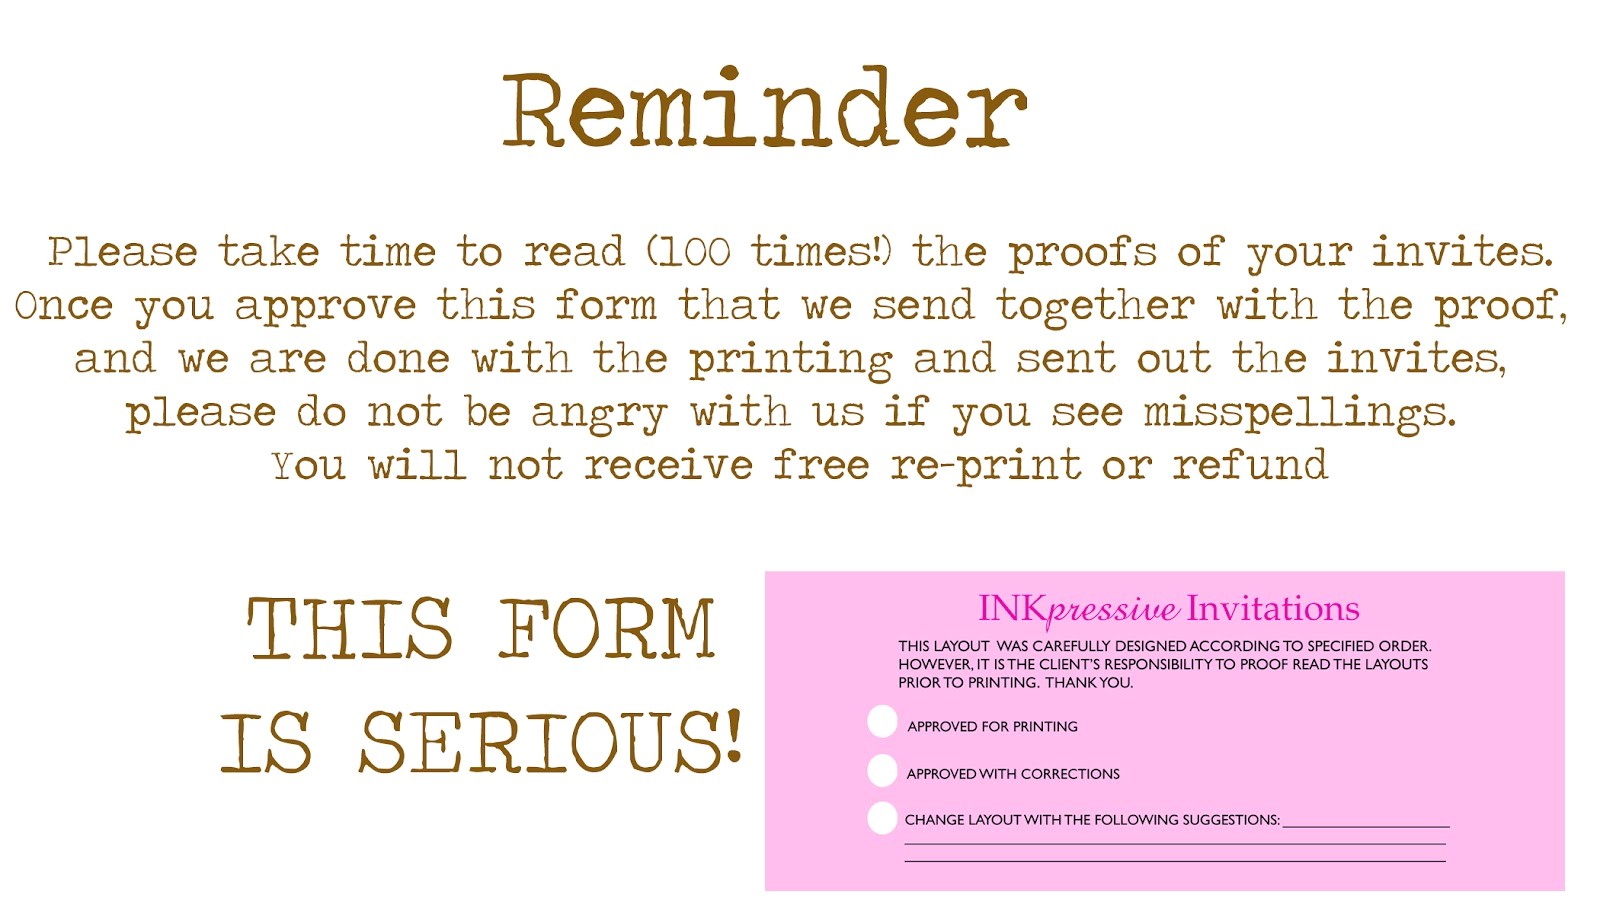 Reminder Invitation for Party Inkpressive Invitations